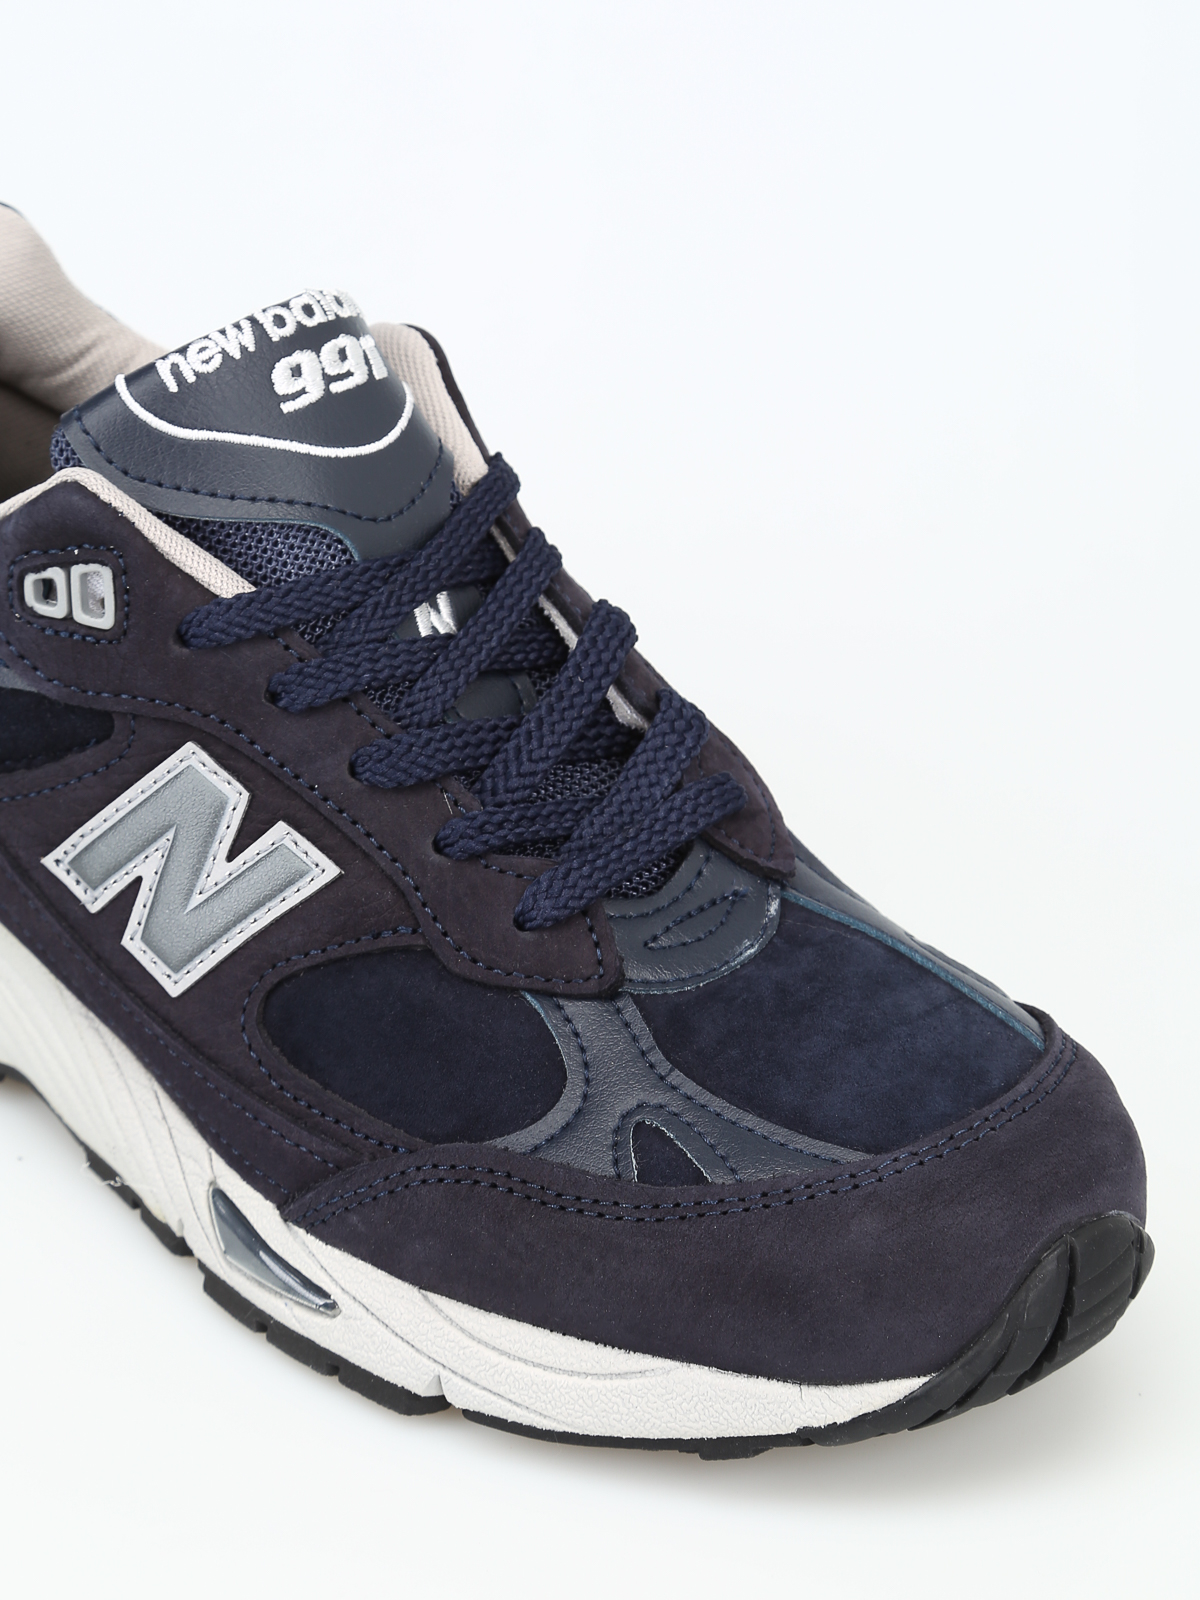 Sneakers New Balance - Sneaker low top 991 blu scuro - M991NPN ...